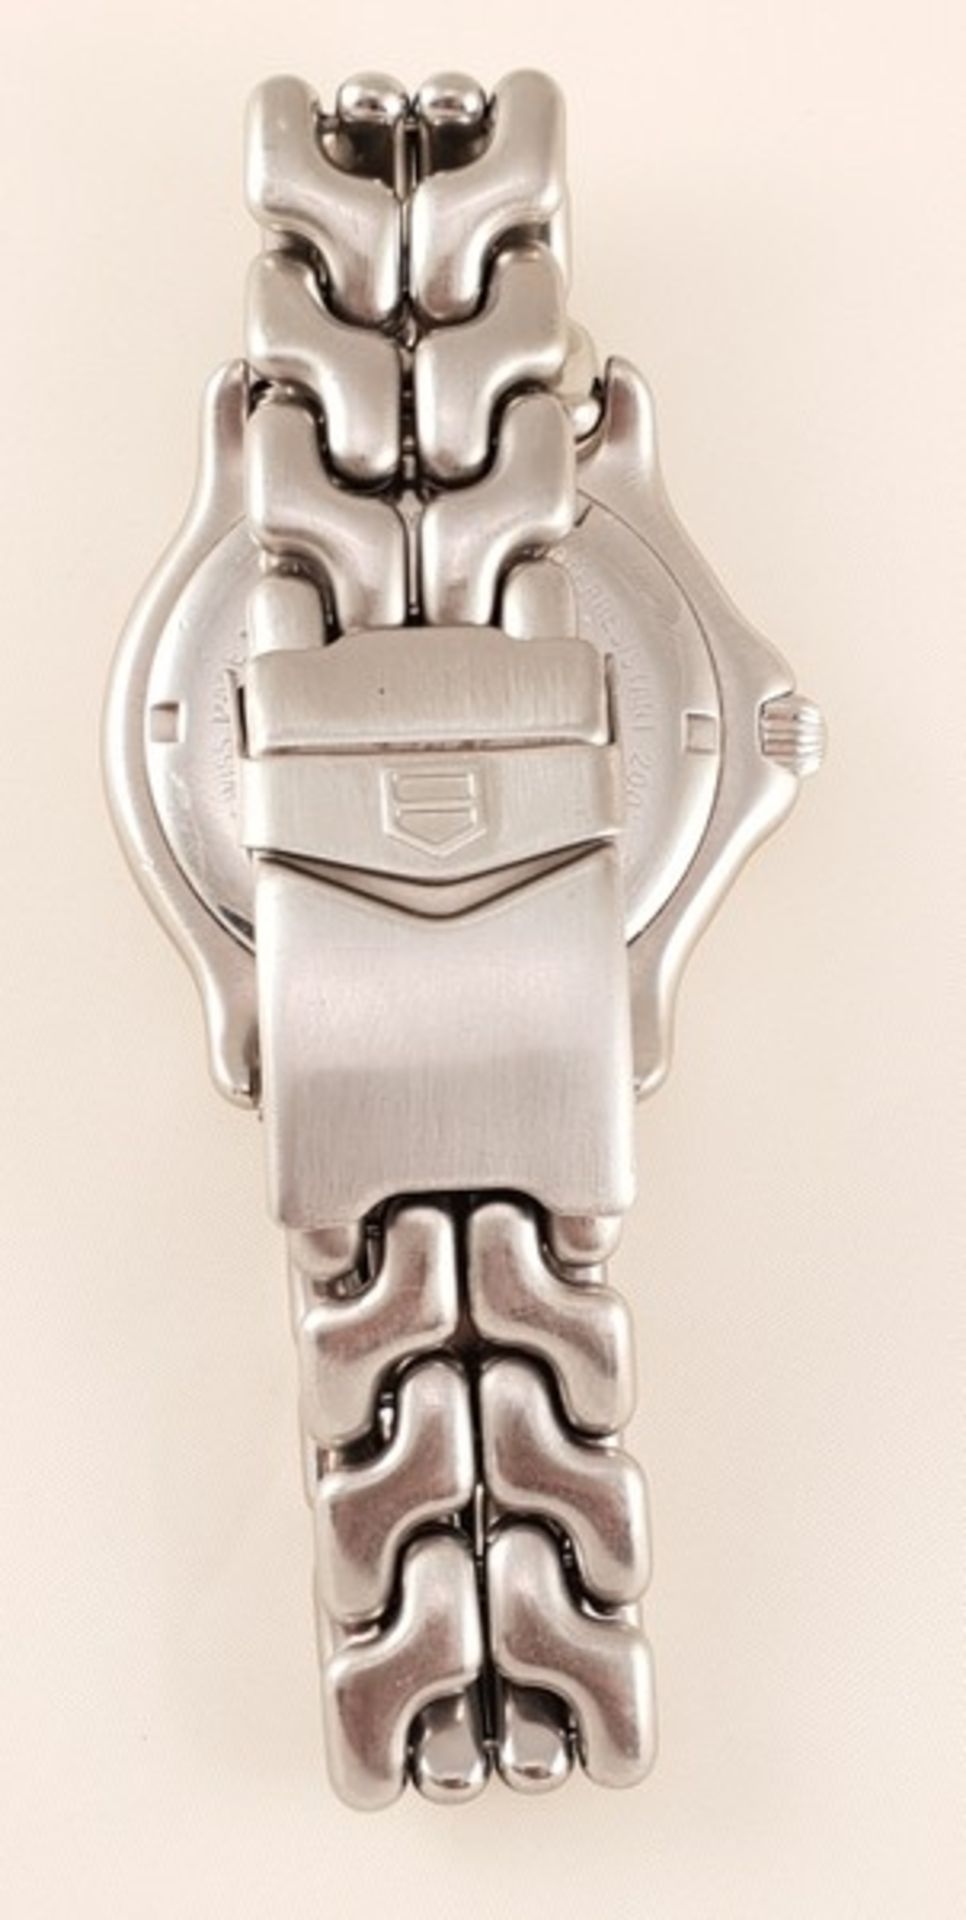 TAG Heuer Professional 200 ,Armbanduhr, Stahl, Quarz, weisses Zifferblatt, Datum, Zentralsekunde, - Bild 2 aus 2